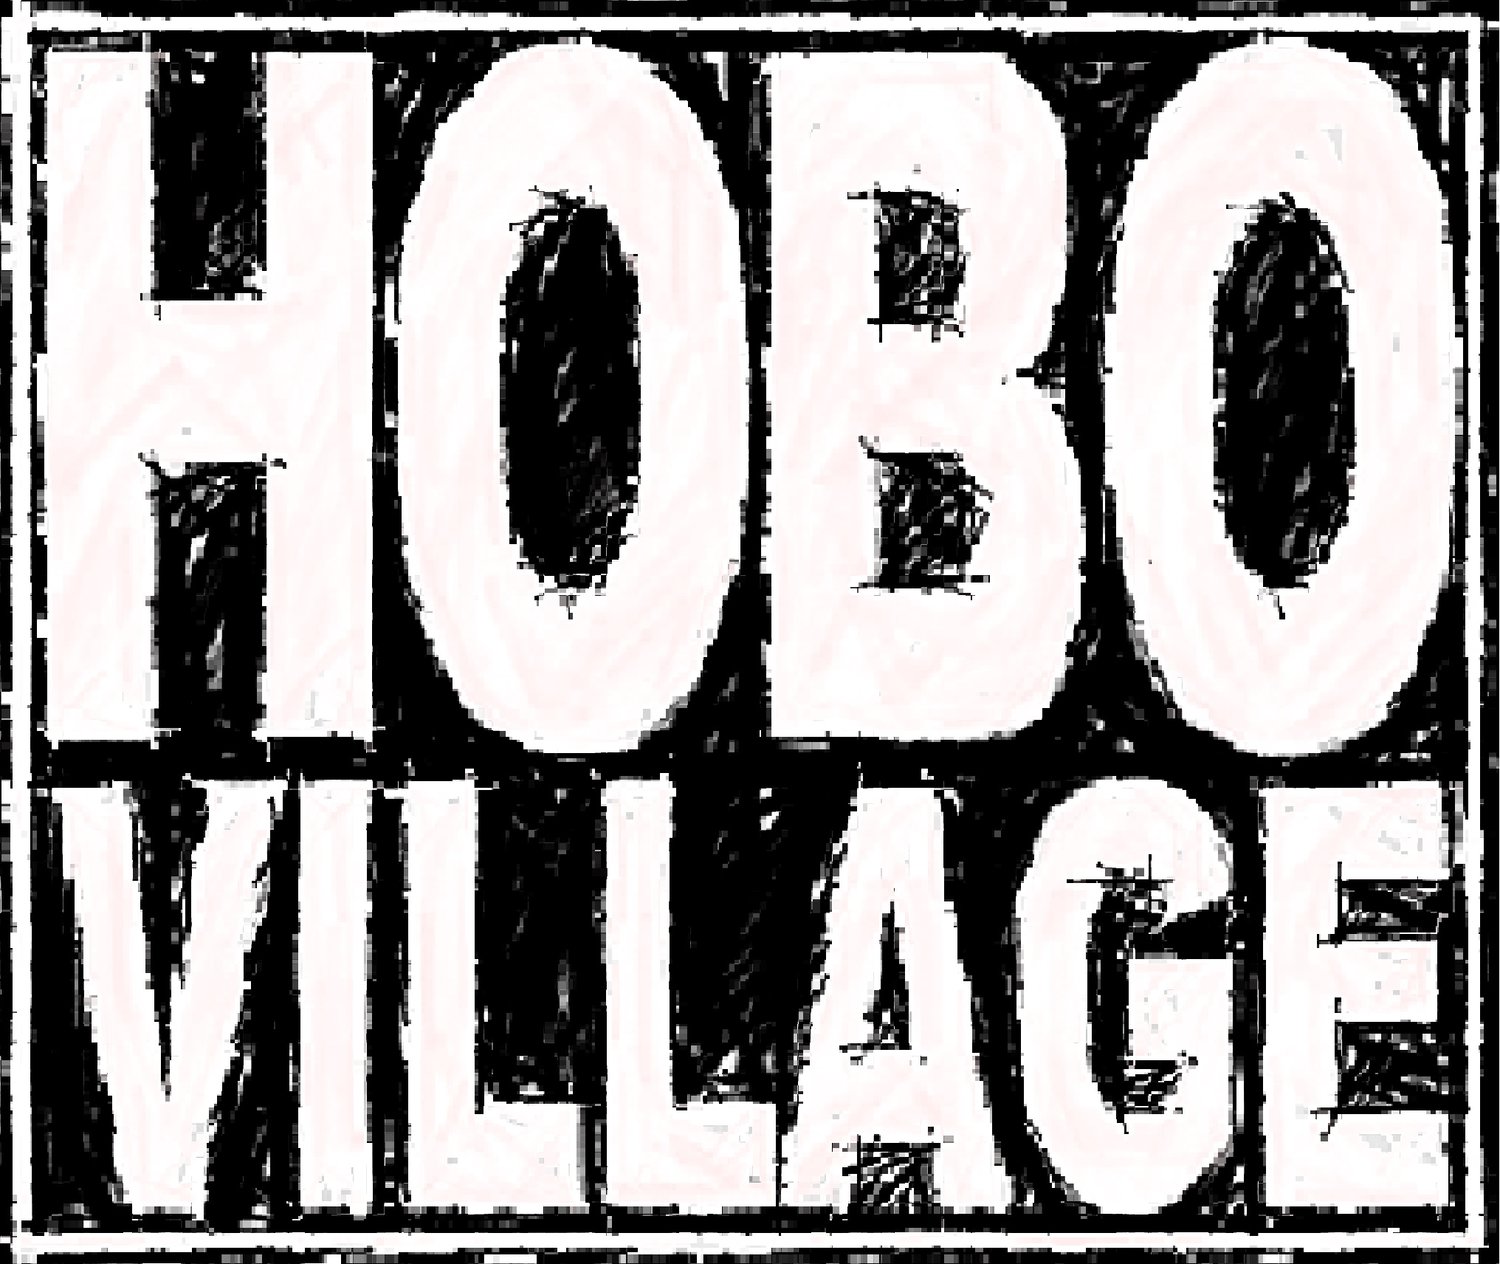 Hobo Village